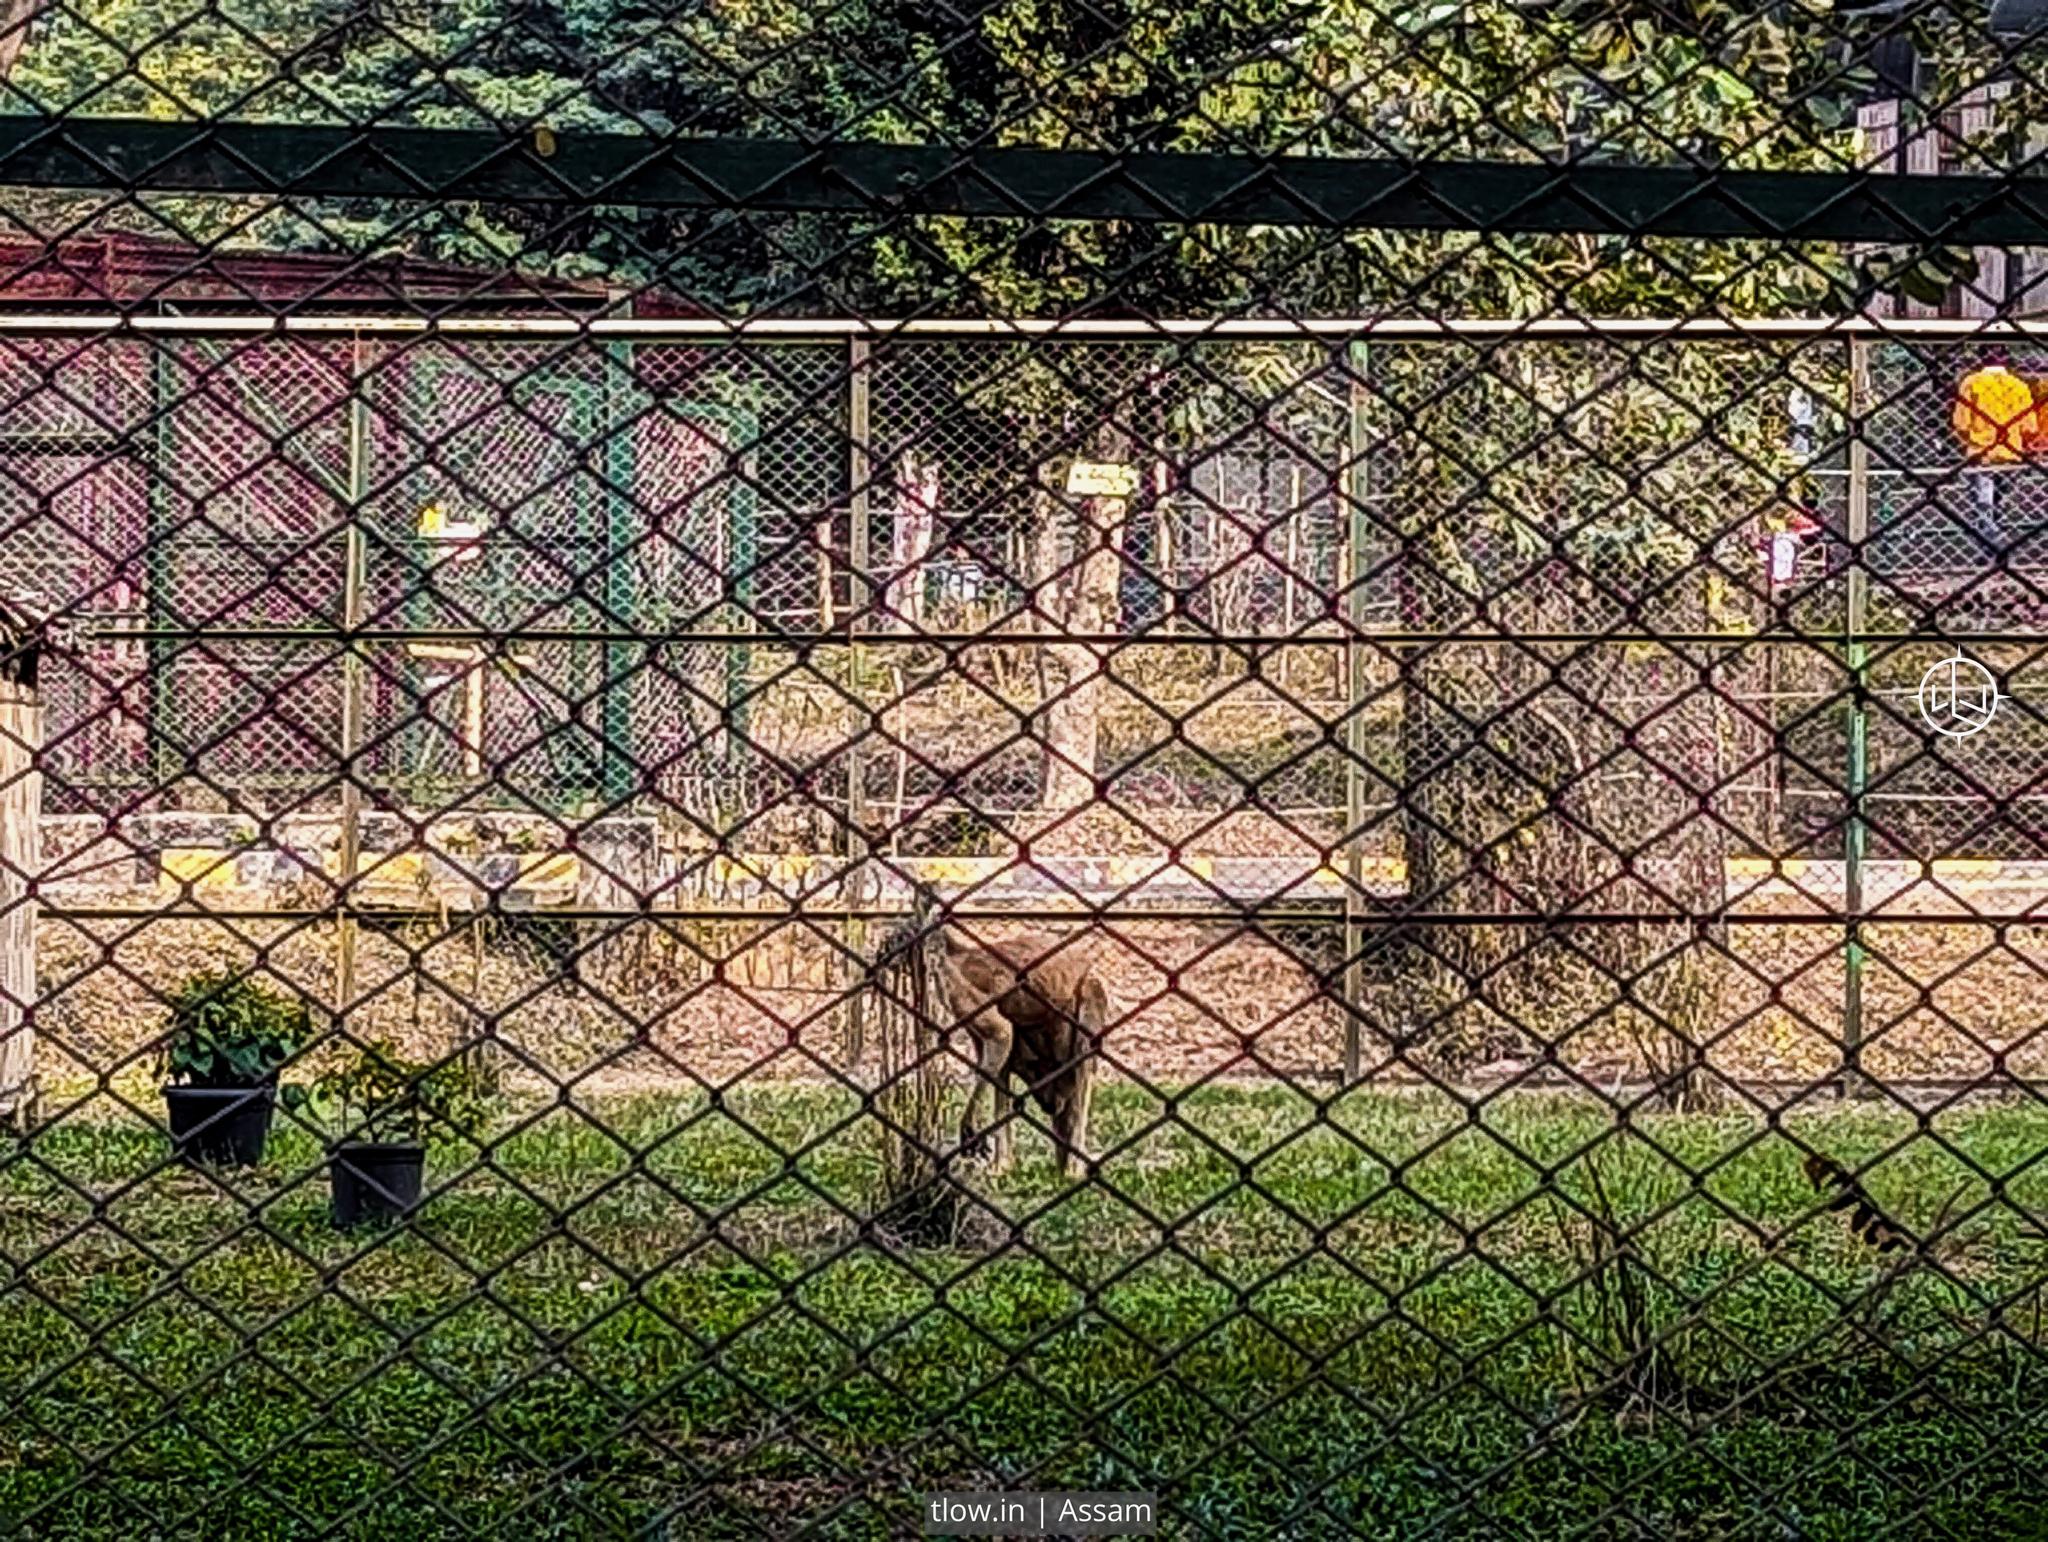 Guwahati zoo